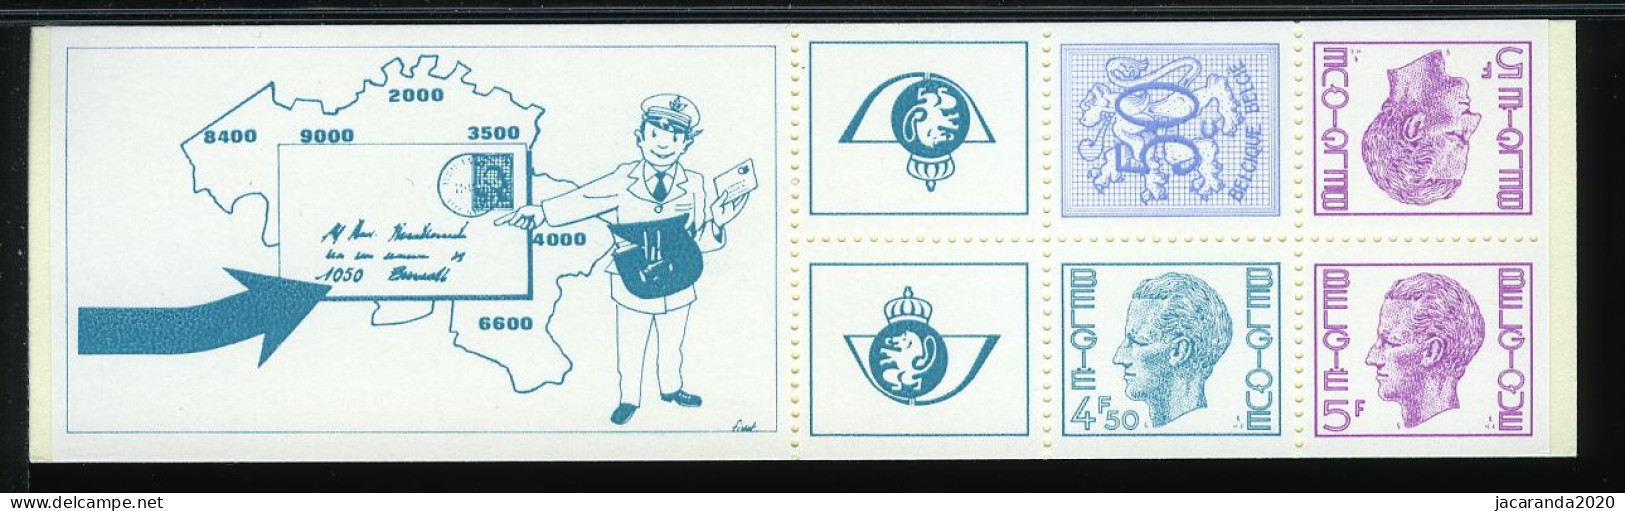 België B12 - Koning Boudewijn - Cijfer Op Heraldieke Leeuw - Roi Baudouin - Chiffre Sur Lion Héraldique - 1975 - 1953-2006 Moderni [B]